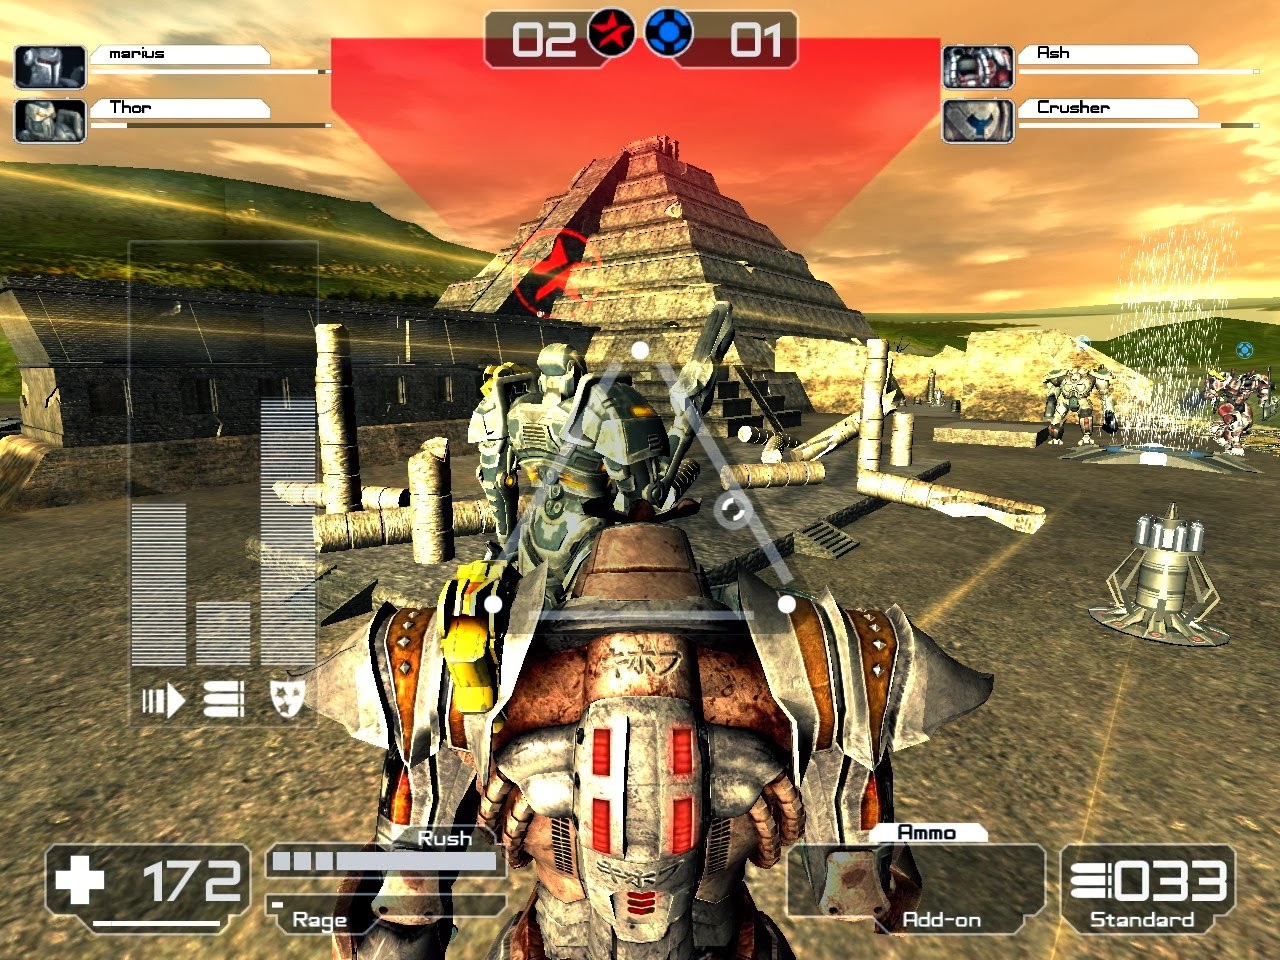 Battle Rage The Robot Wars Game PC ~ Free Download PC Game ...